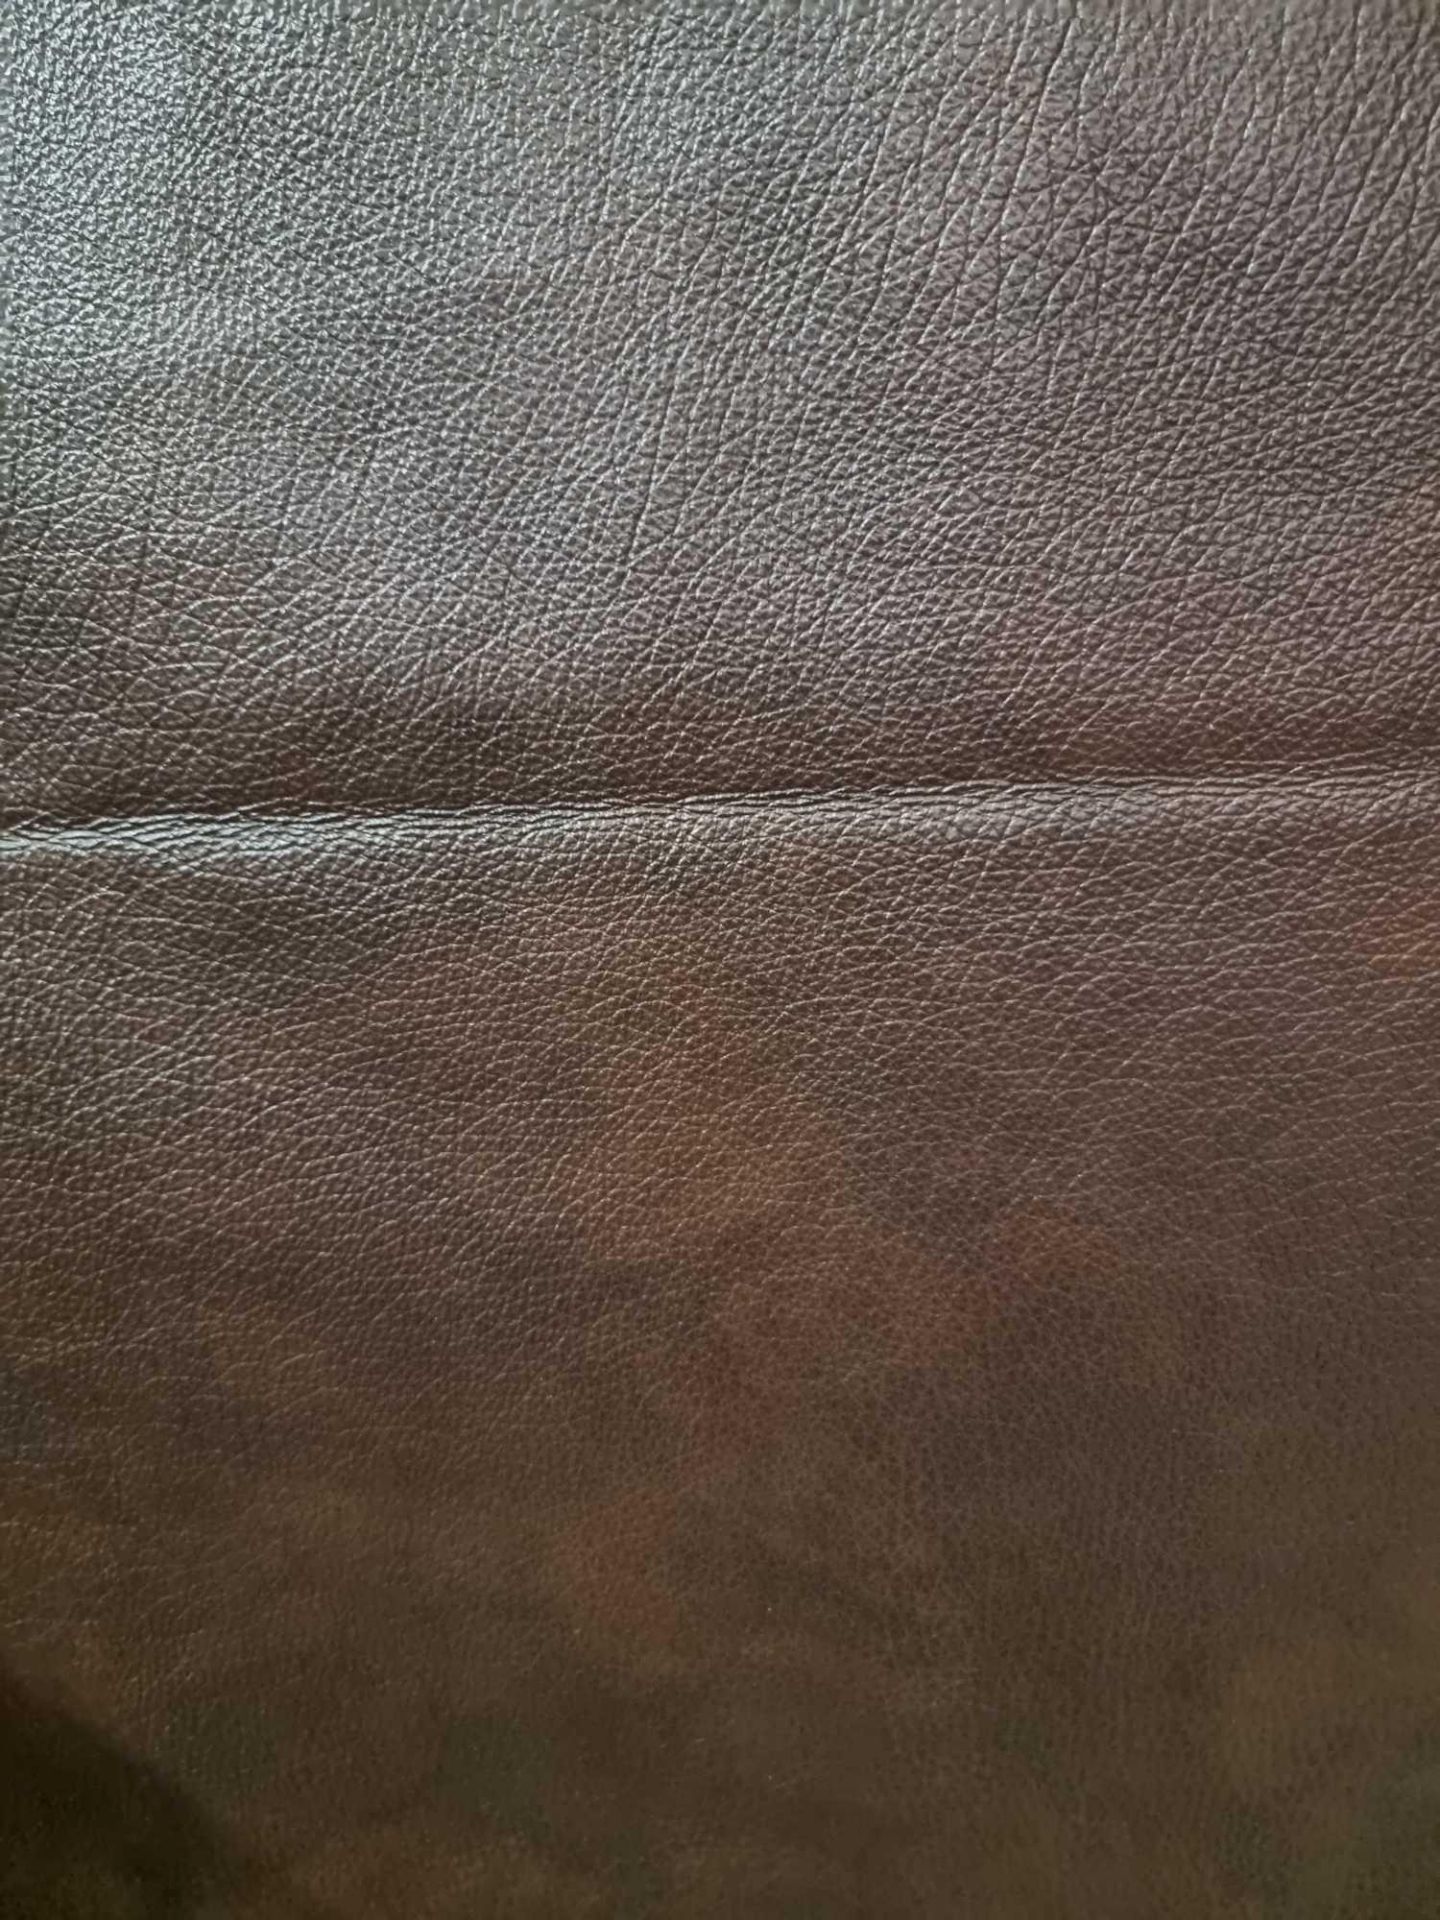 Trim International Memphis Brown Leather Hide approximately 4 62M2 2 2 x 2 1cm ( Hide No,186) - Image 2 of 2